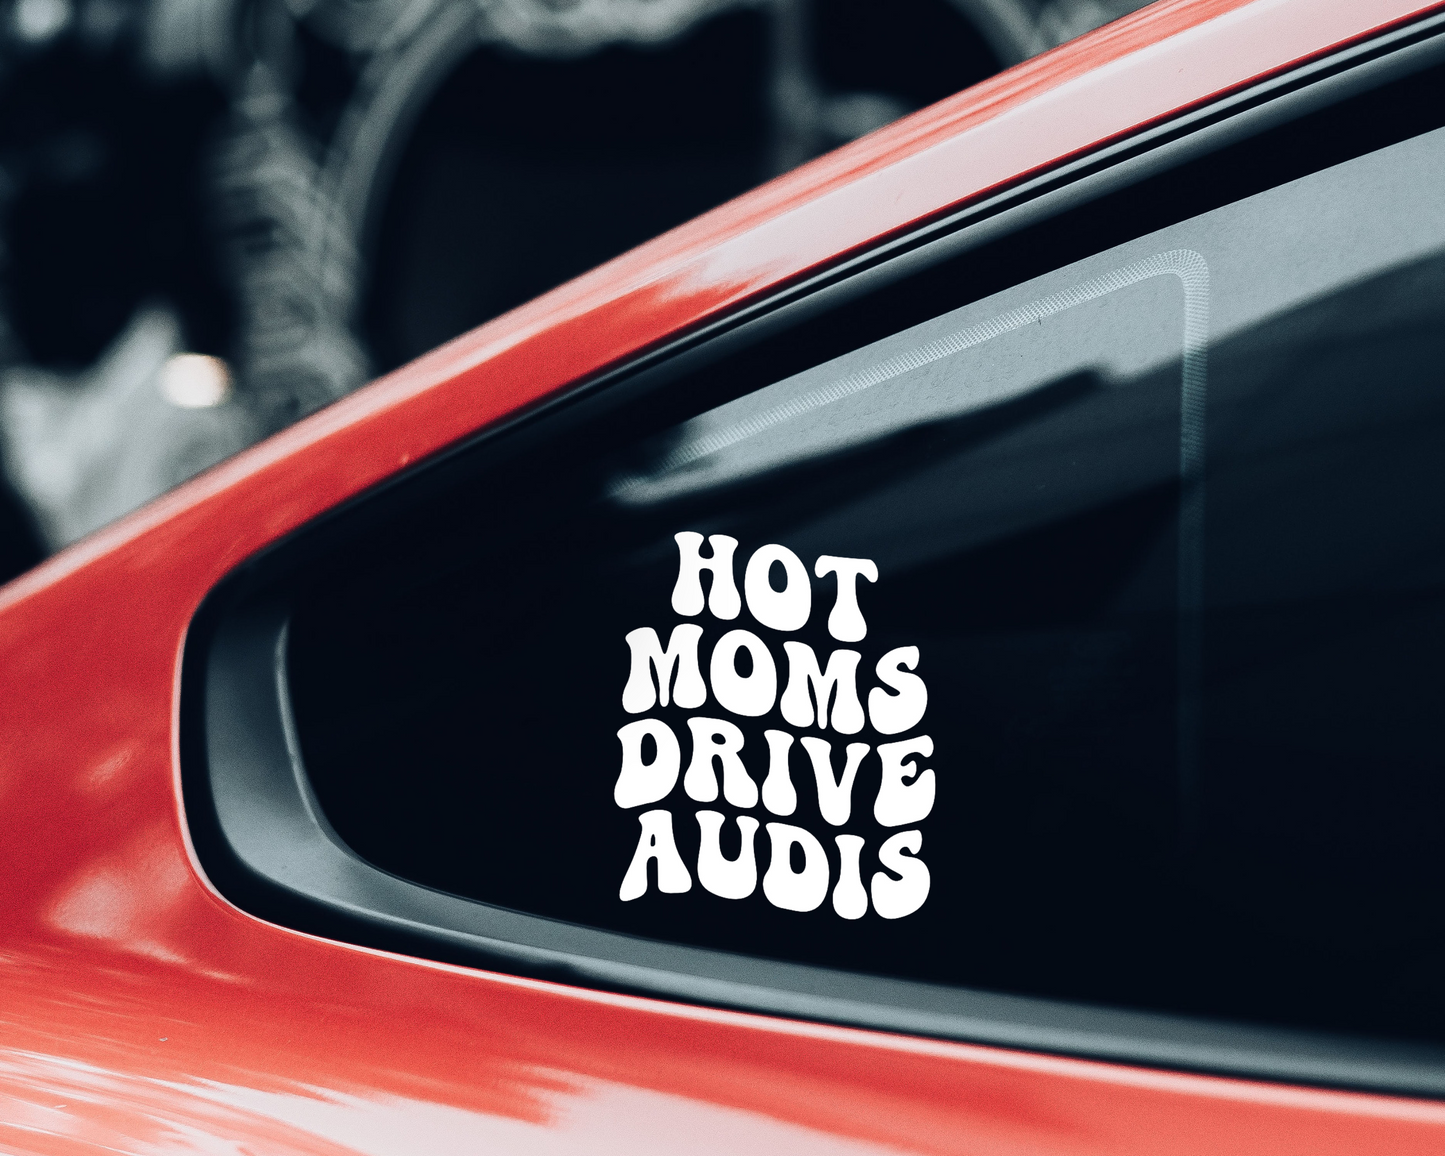 Hot Moms Drive Audis